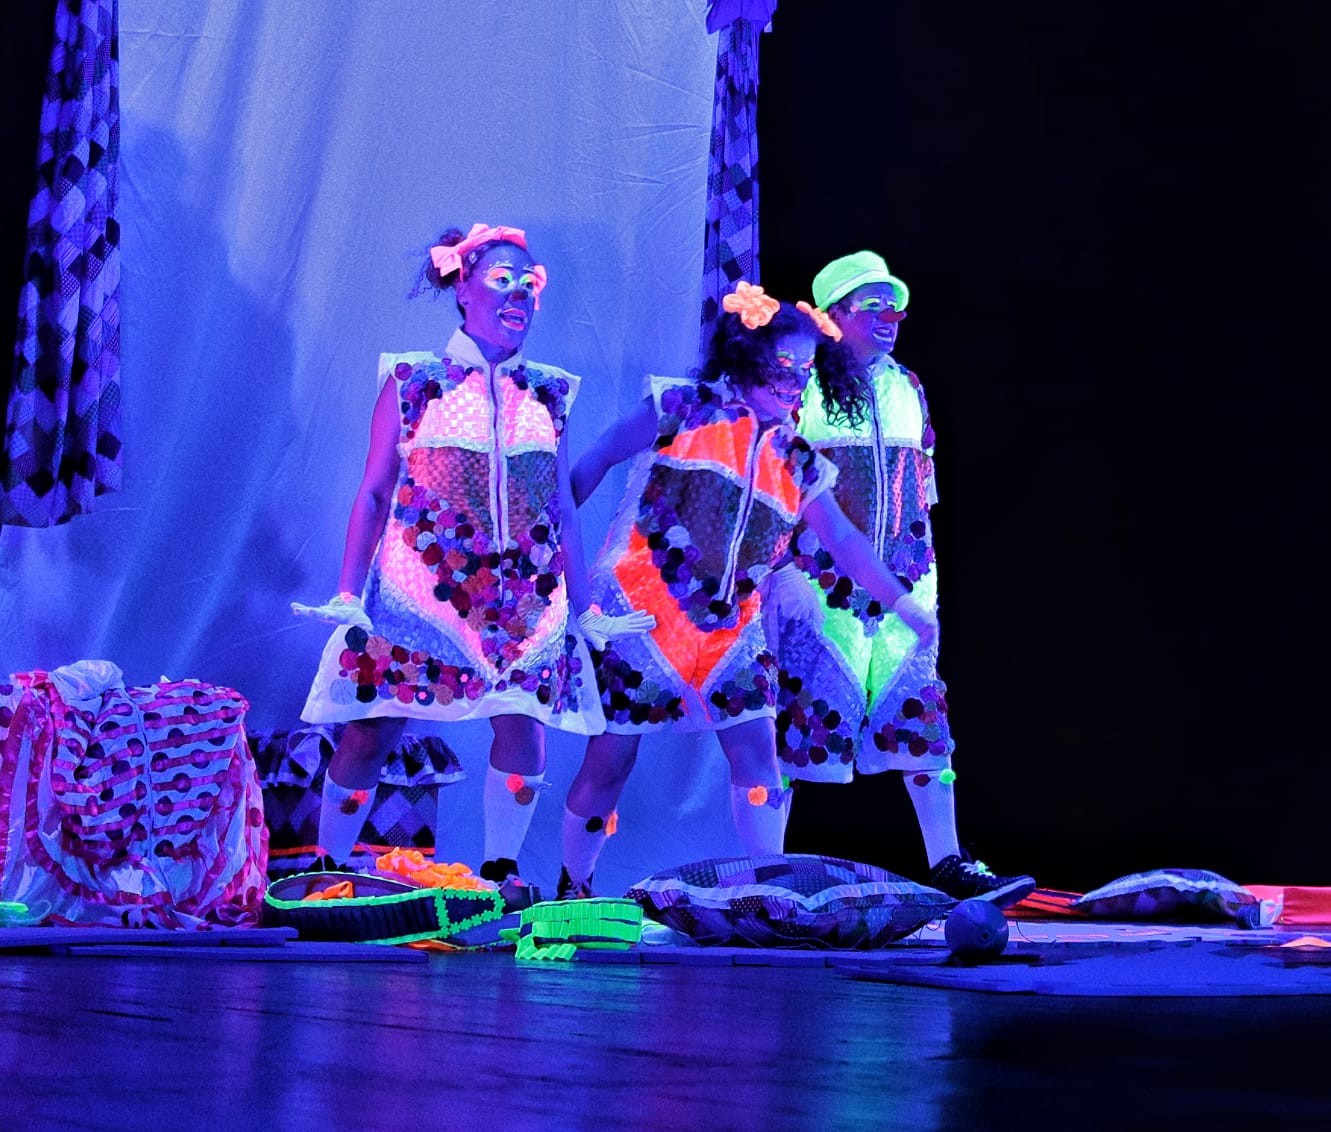 Espetáculo teatral caruaruense se apresenta no Festival de Inverno de Garanhuns